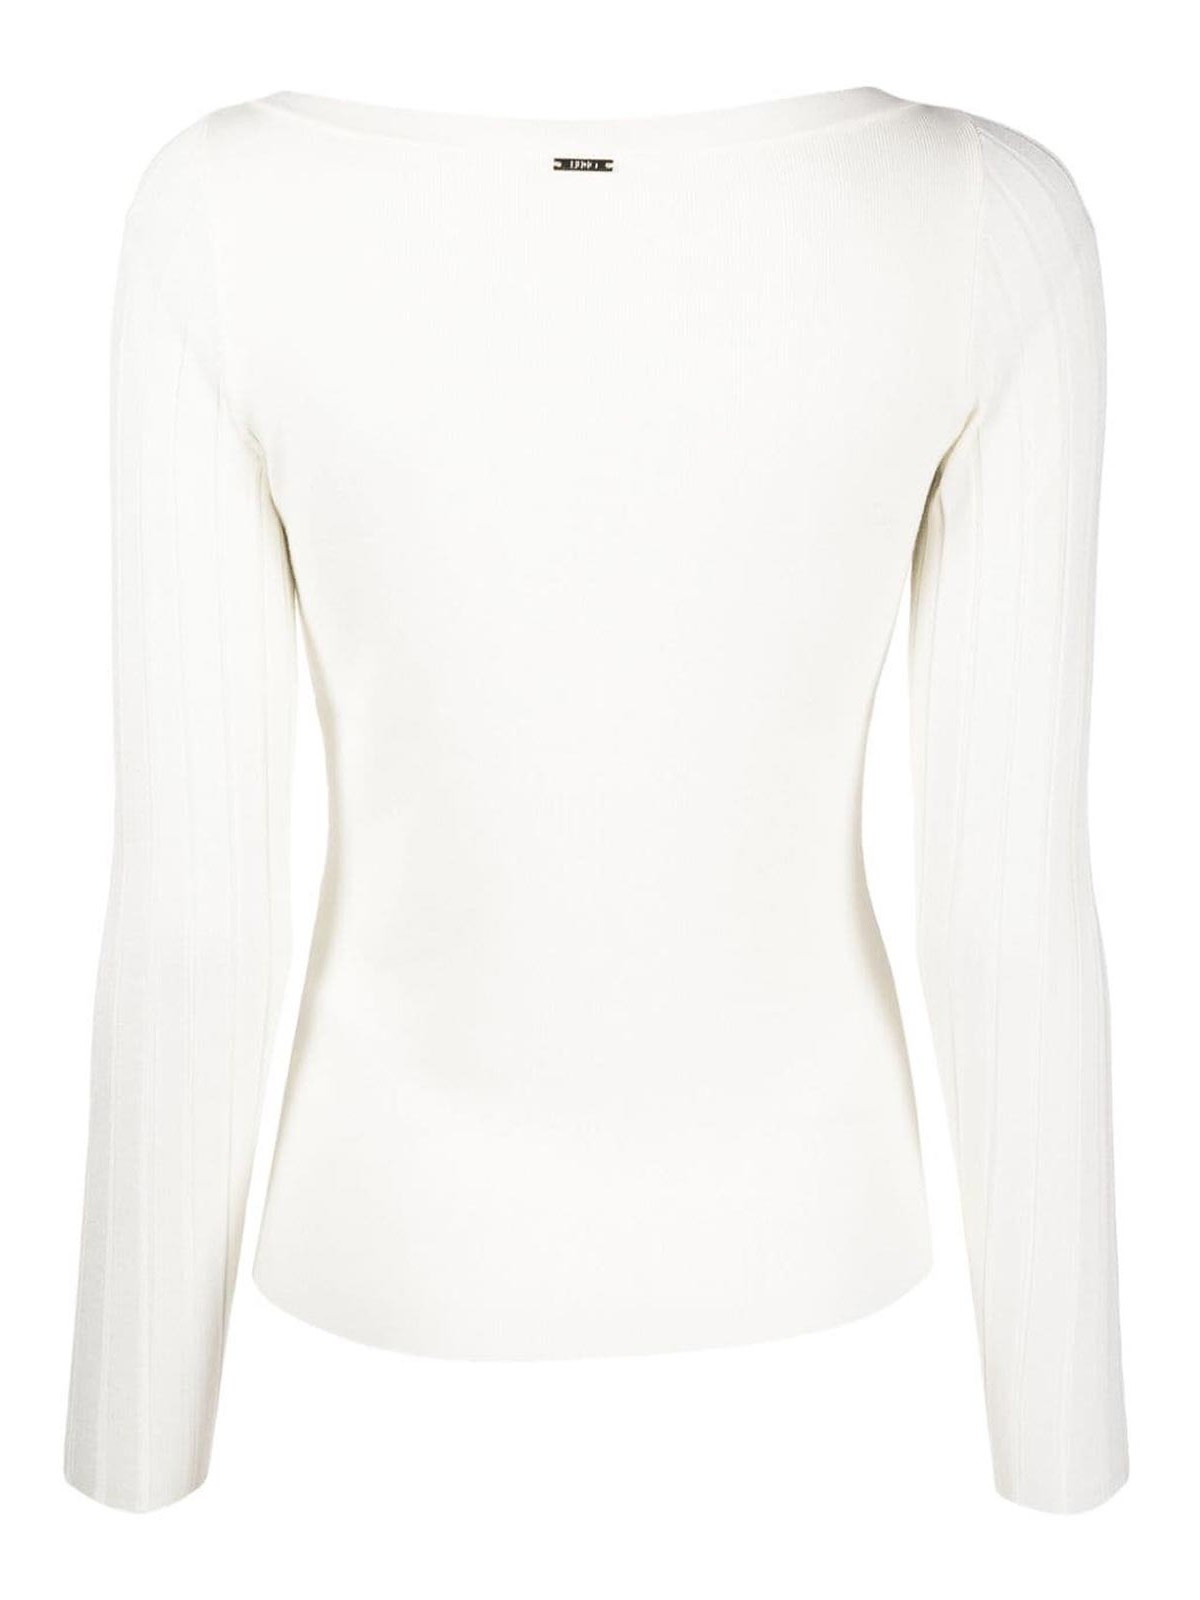 LIU JO stud-embellished sleeveless dress - White